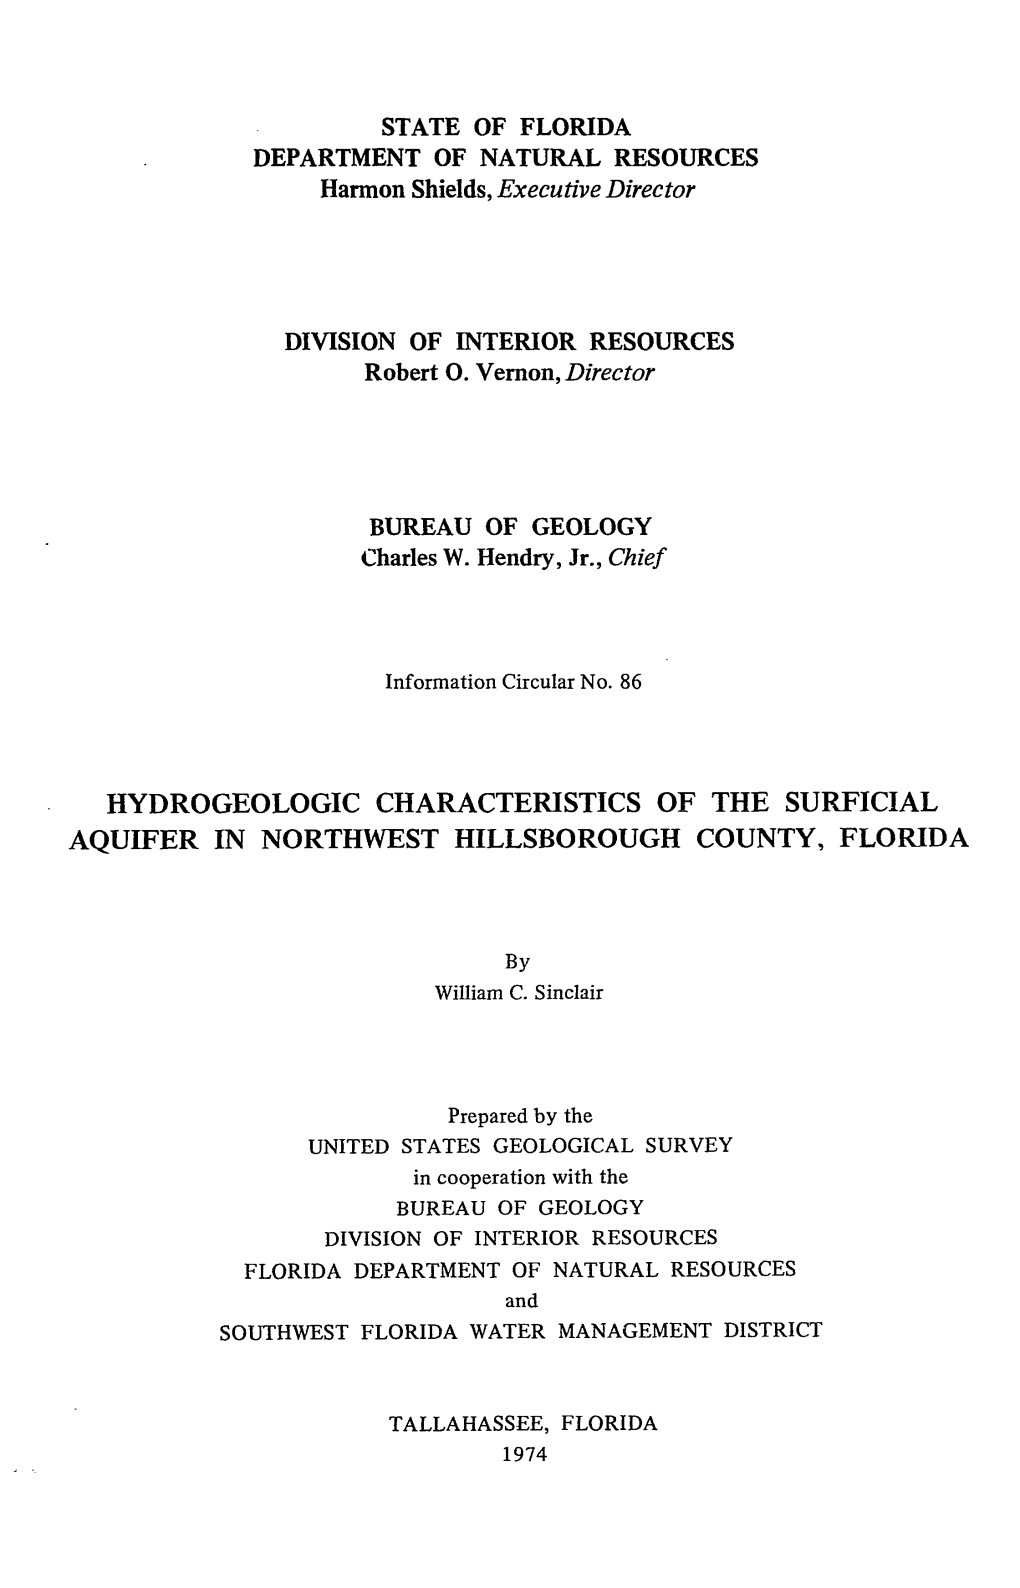 Hydrogeologic Characteristics of the Surficial Aquifer in Northwest Hillsborough County, Florida